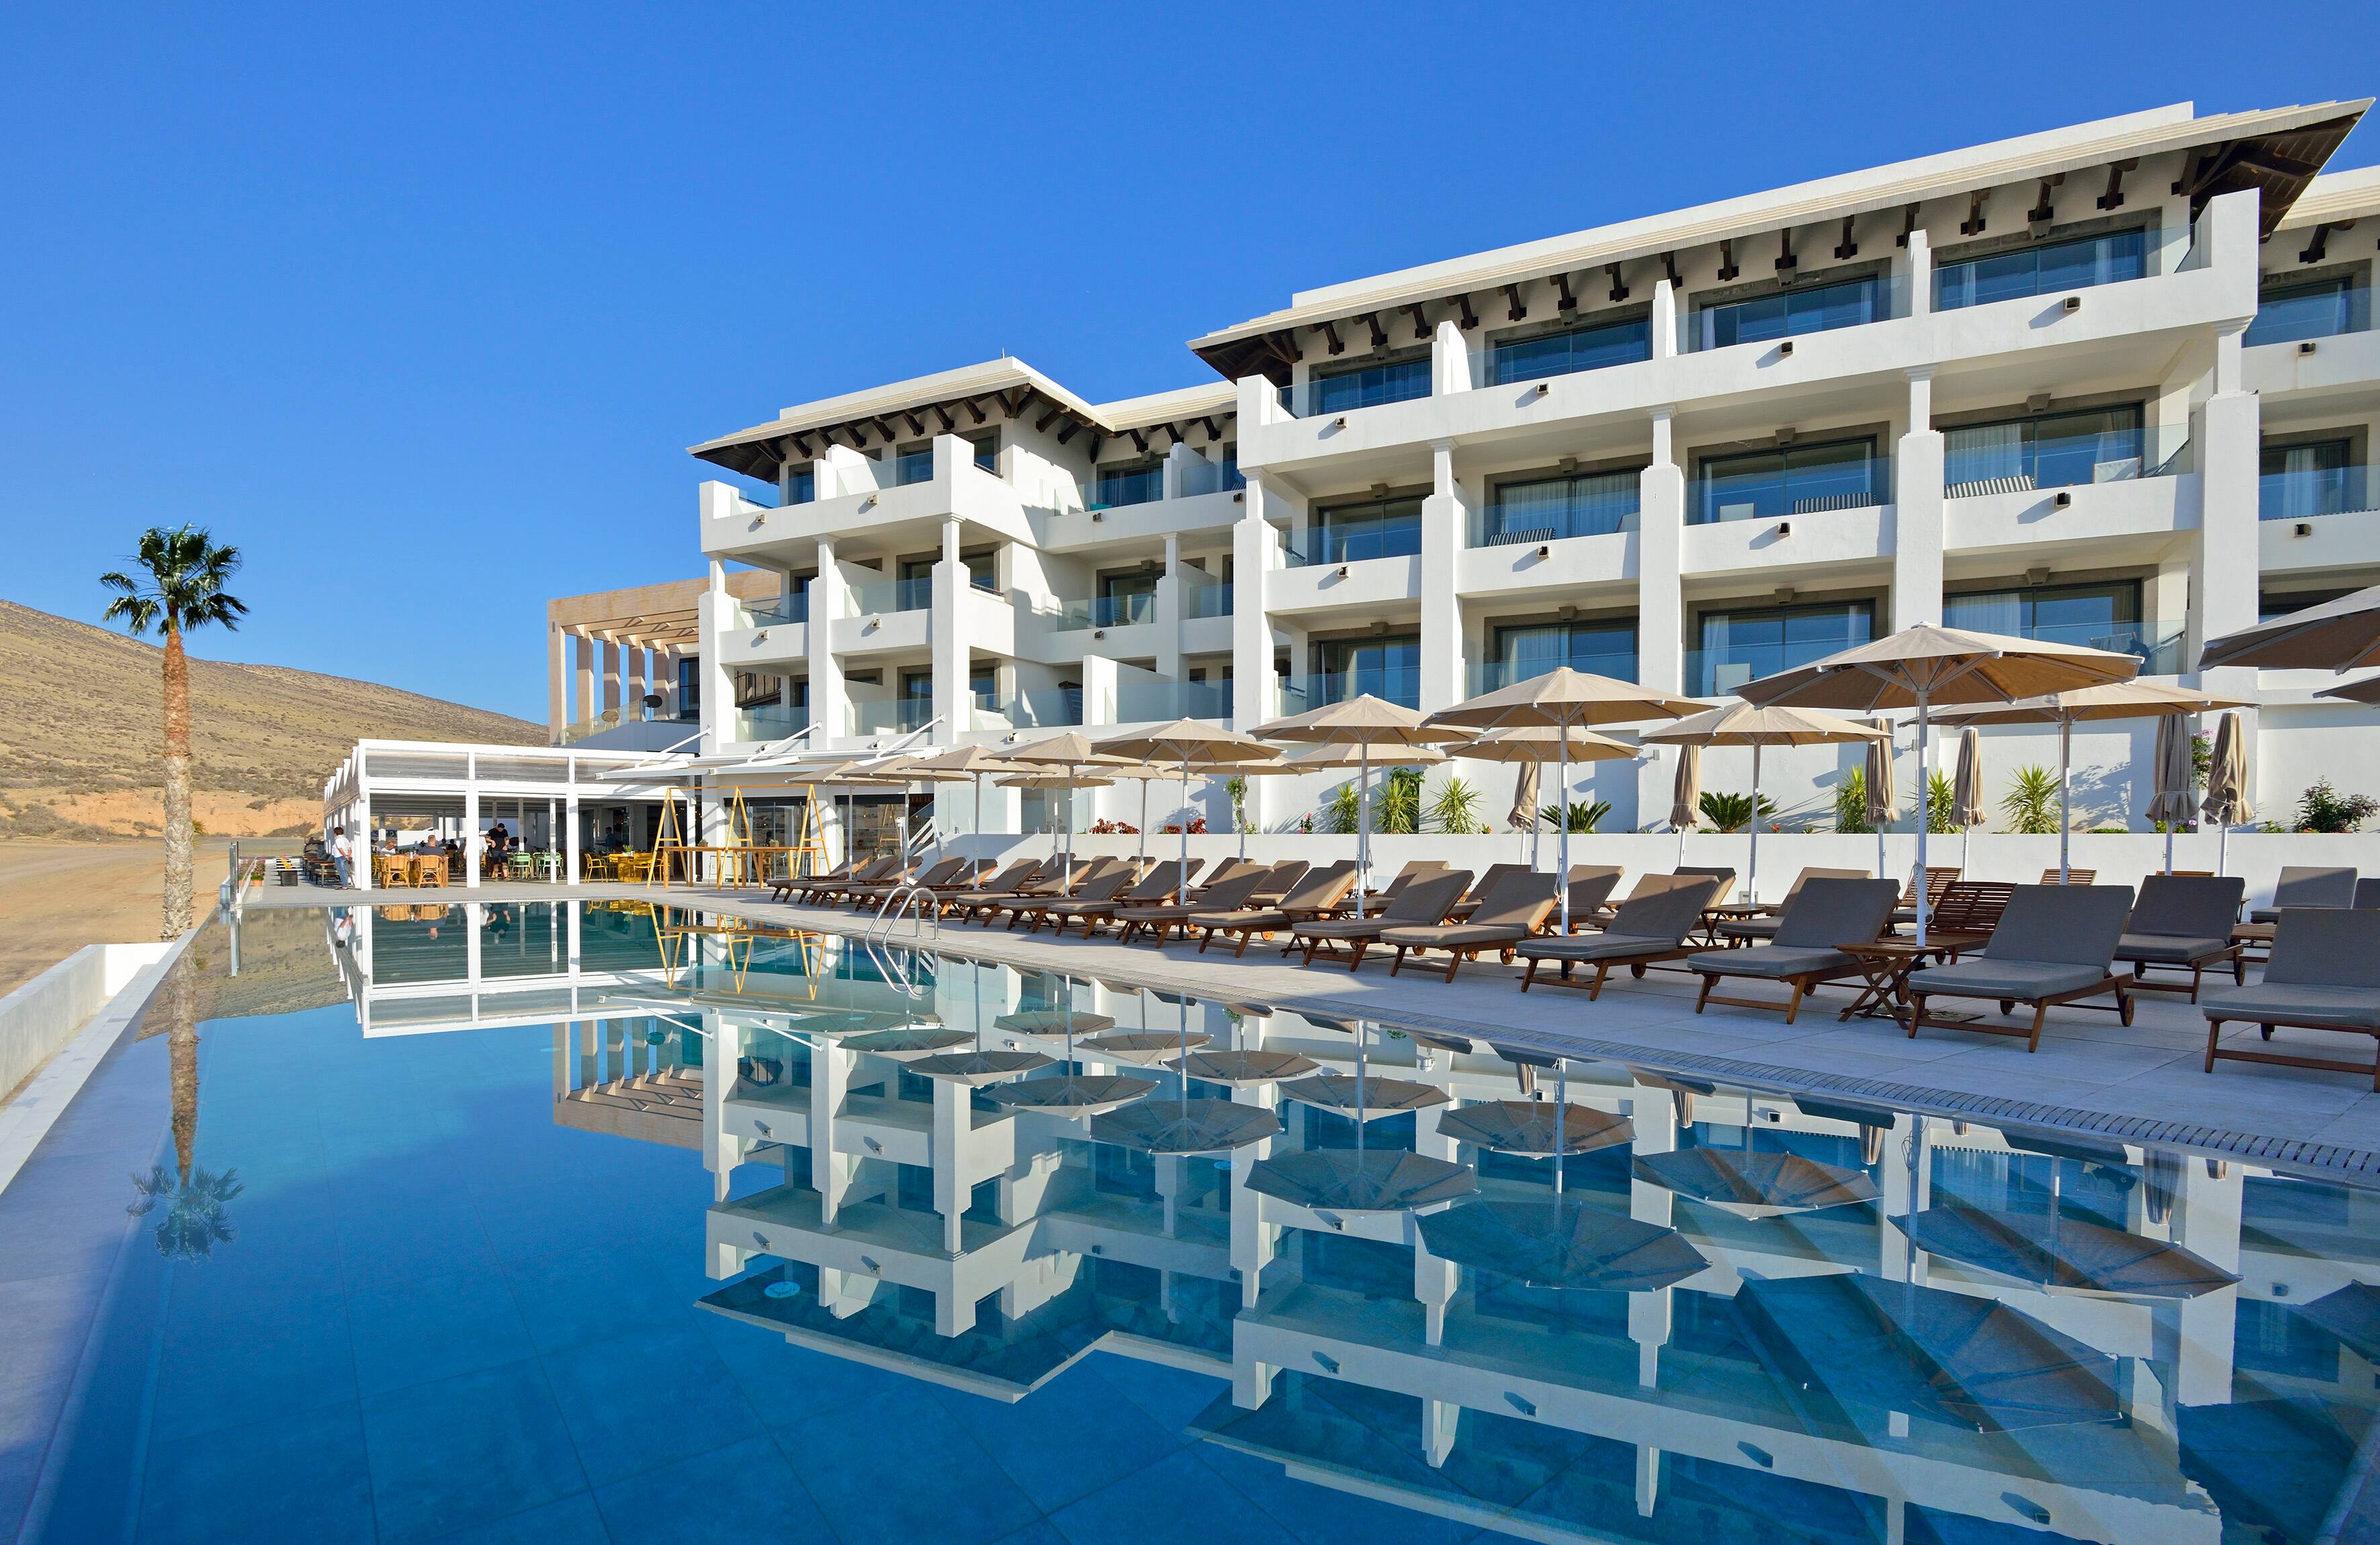 Innside Fuerteventura Hotel, a hotel for adults Melia